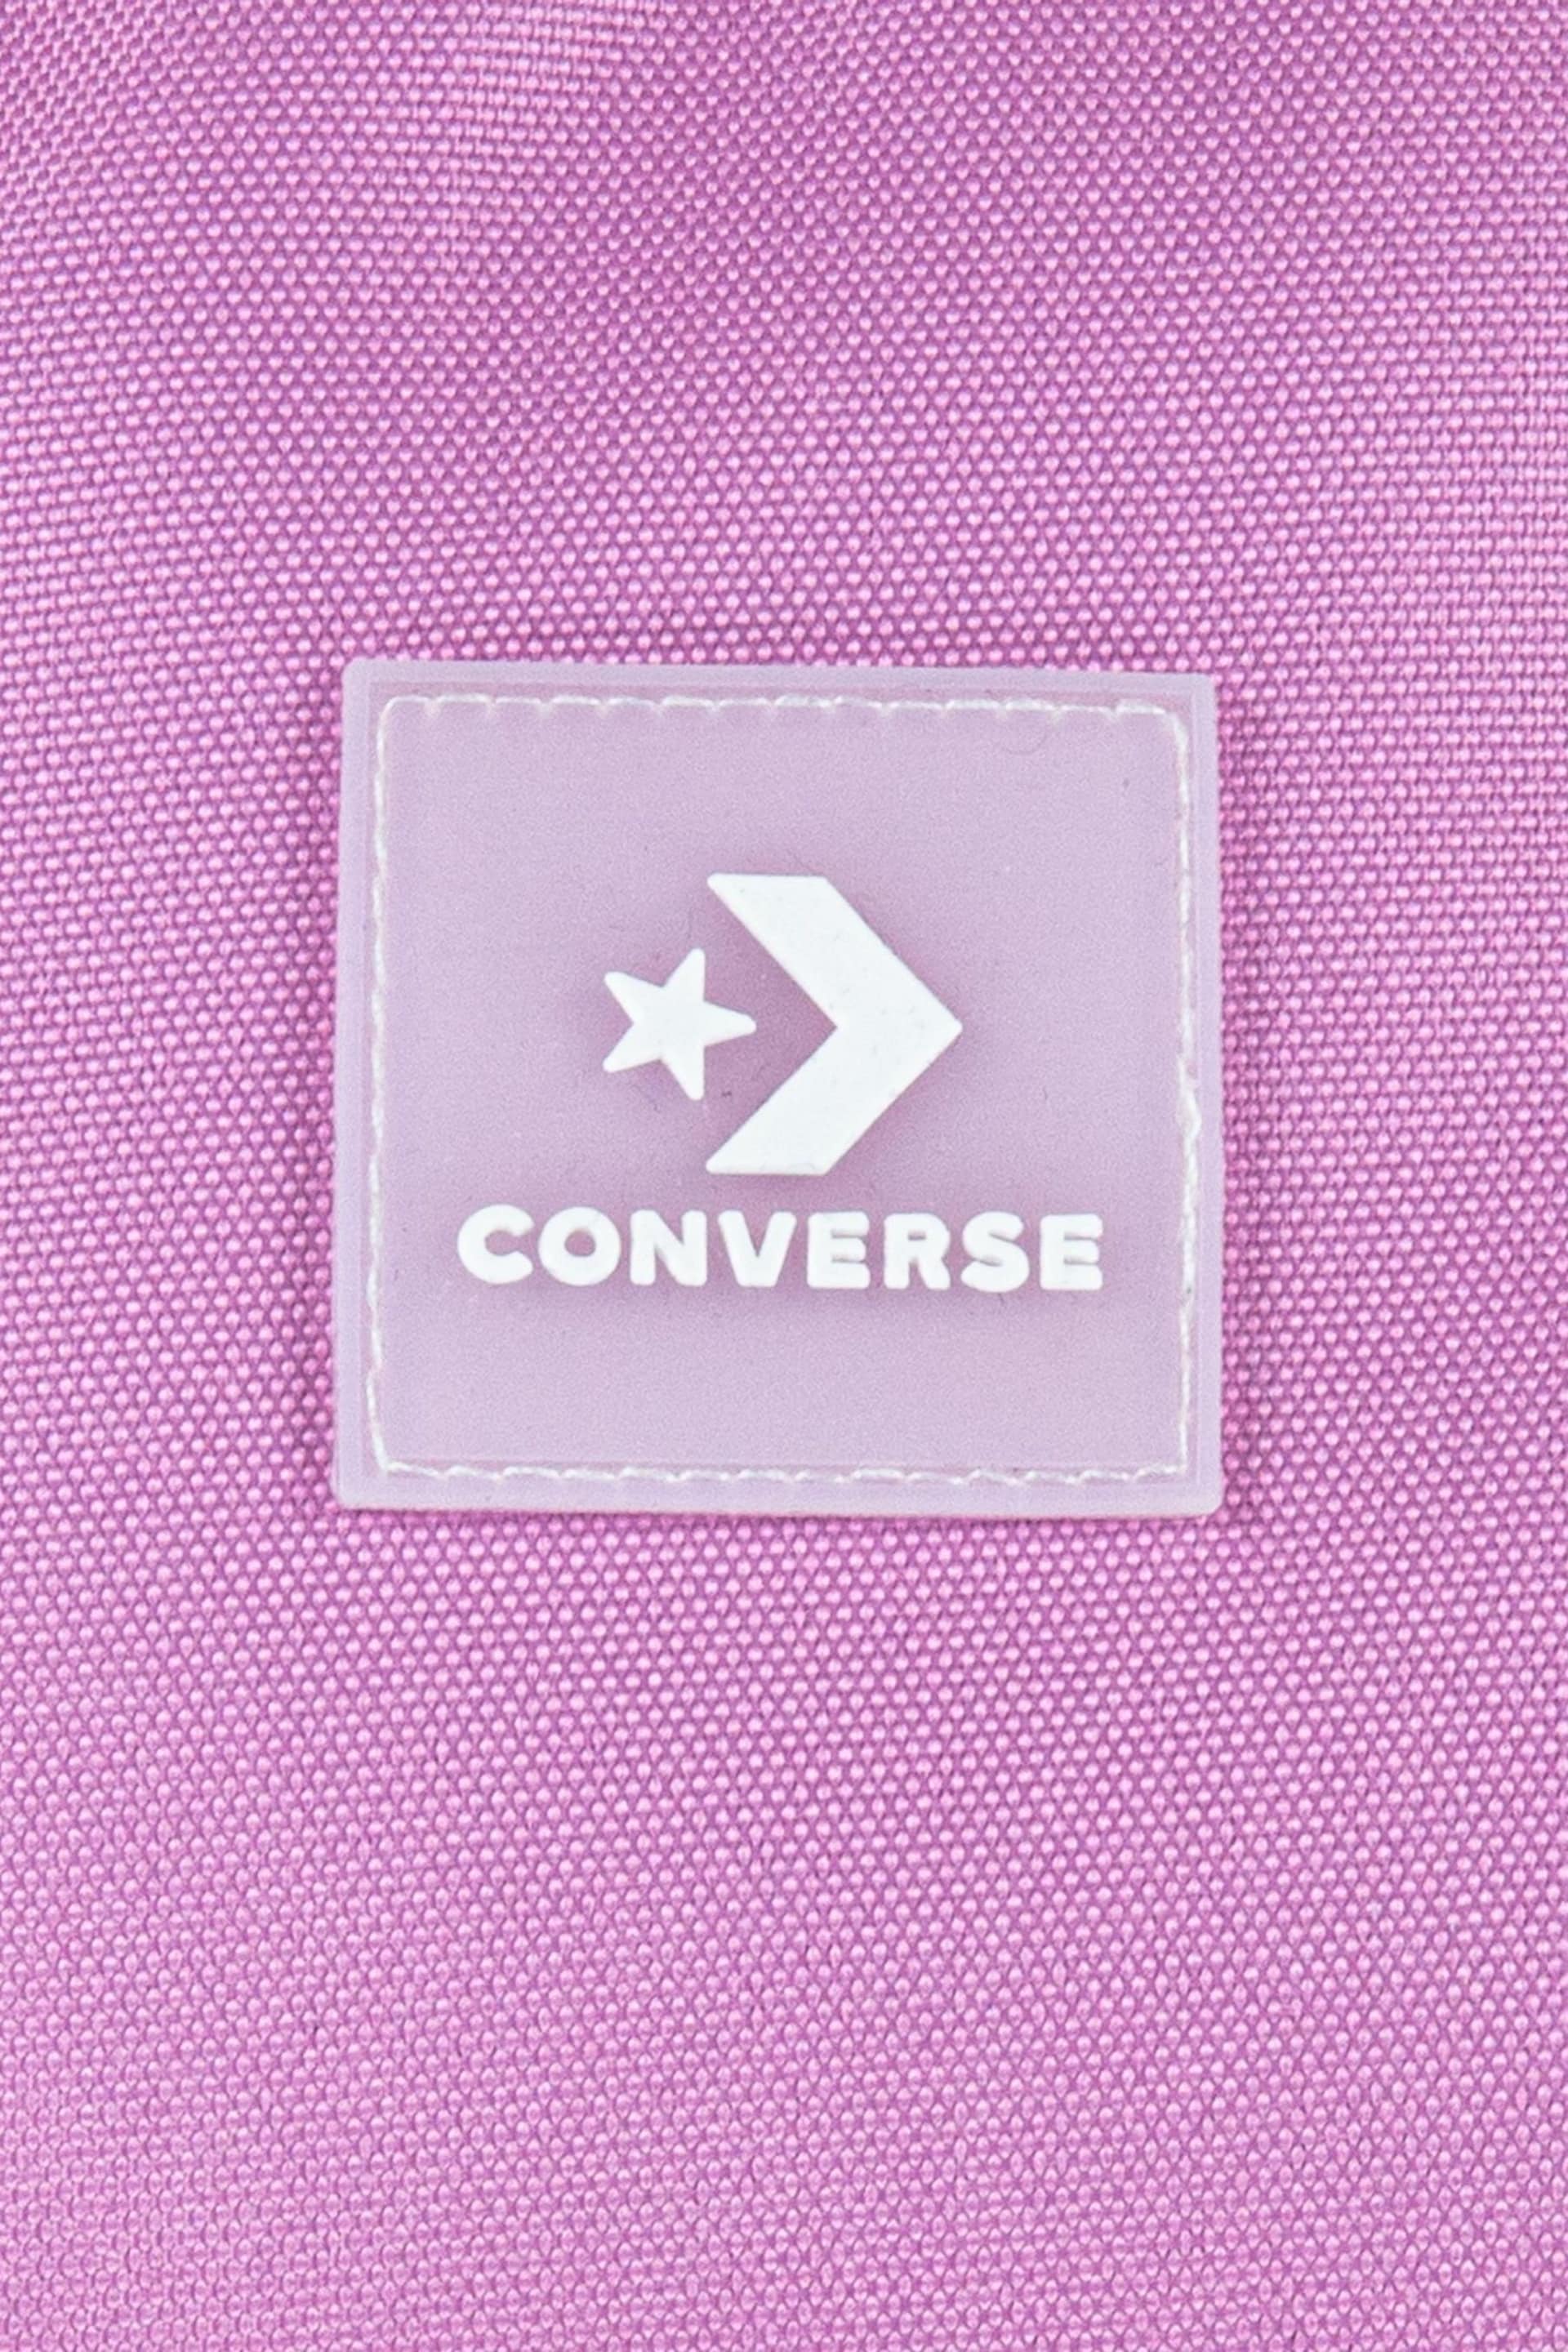 Converse Pink Bag - Image 7 of 7